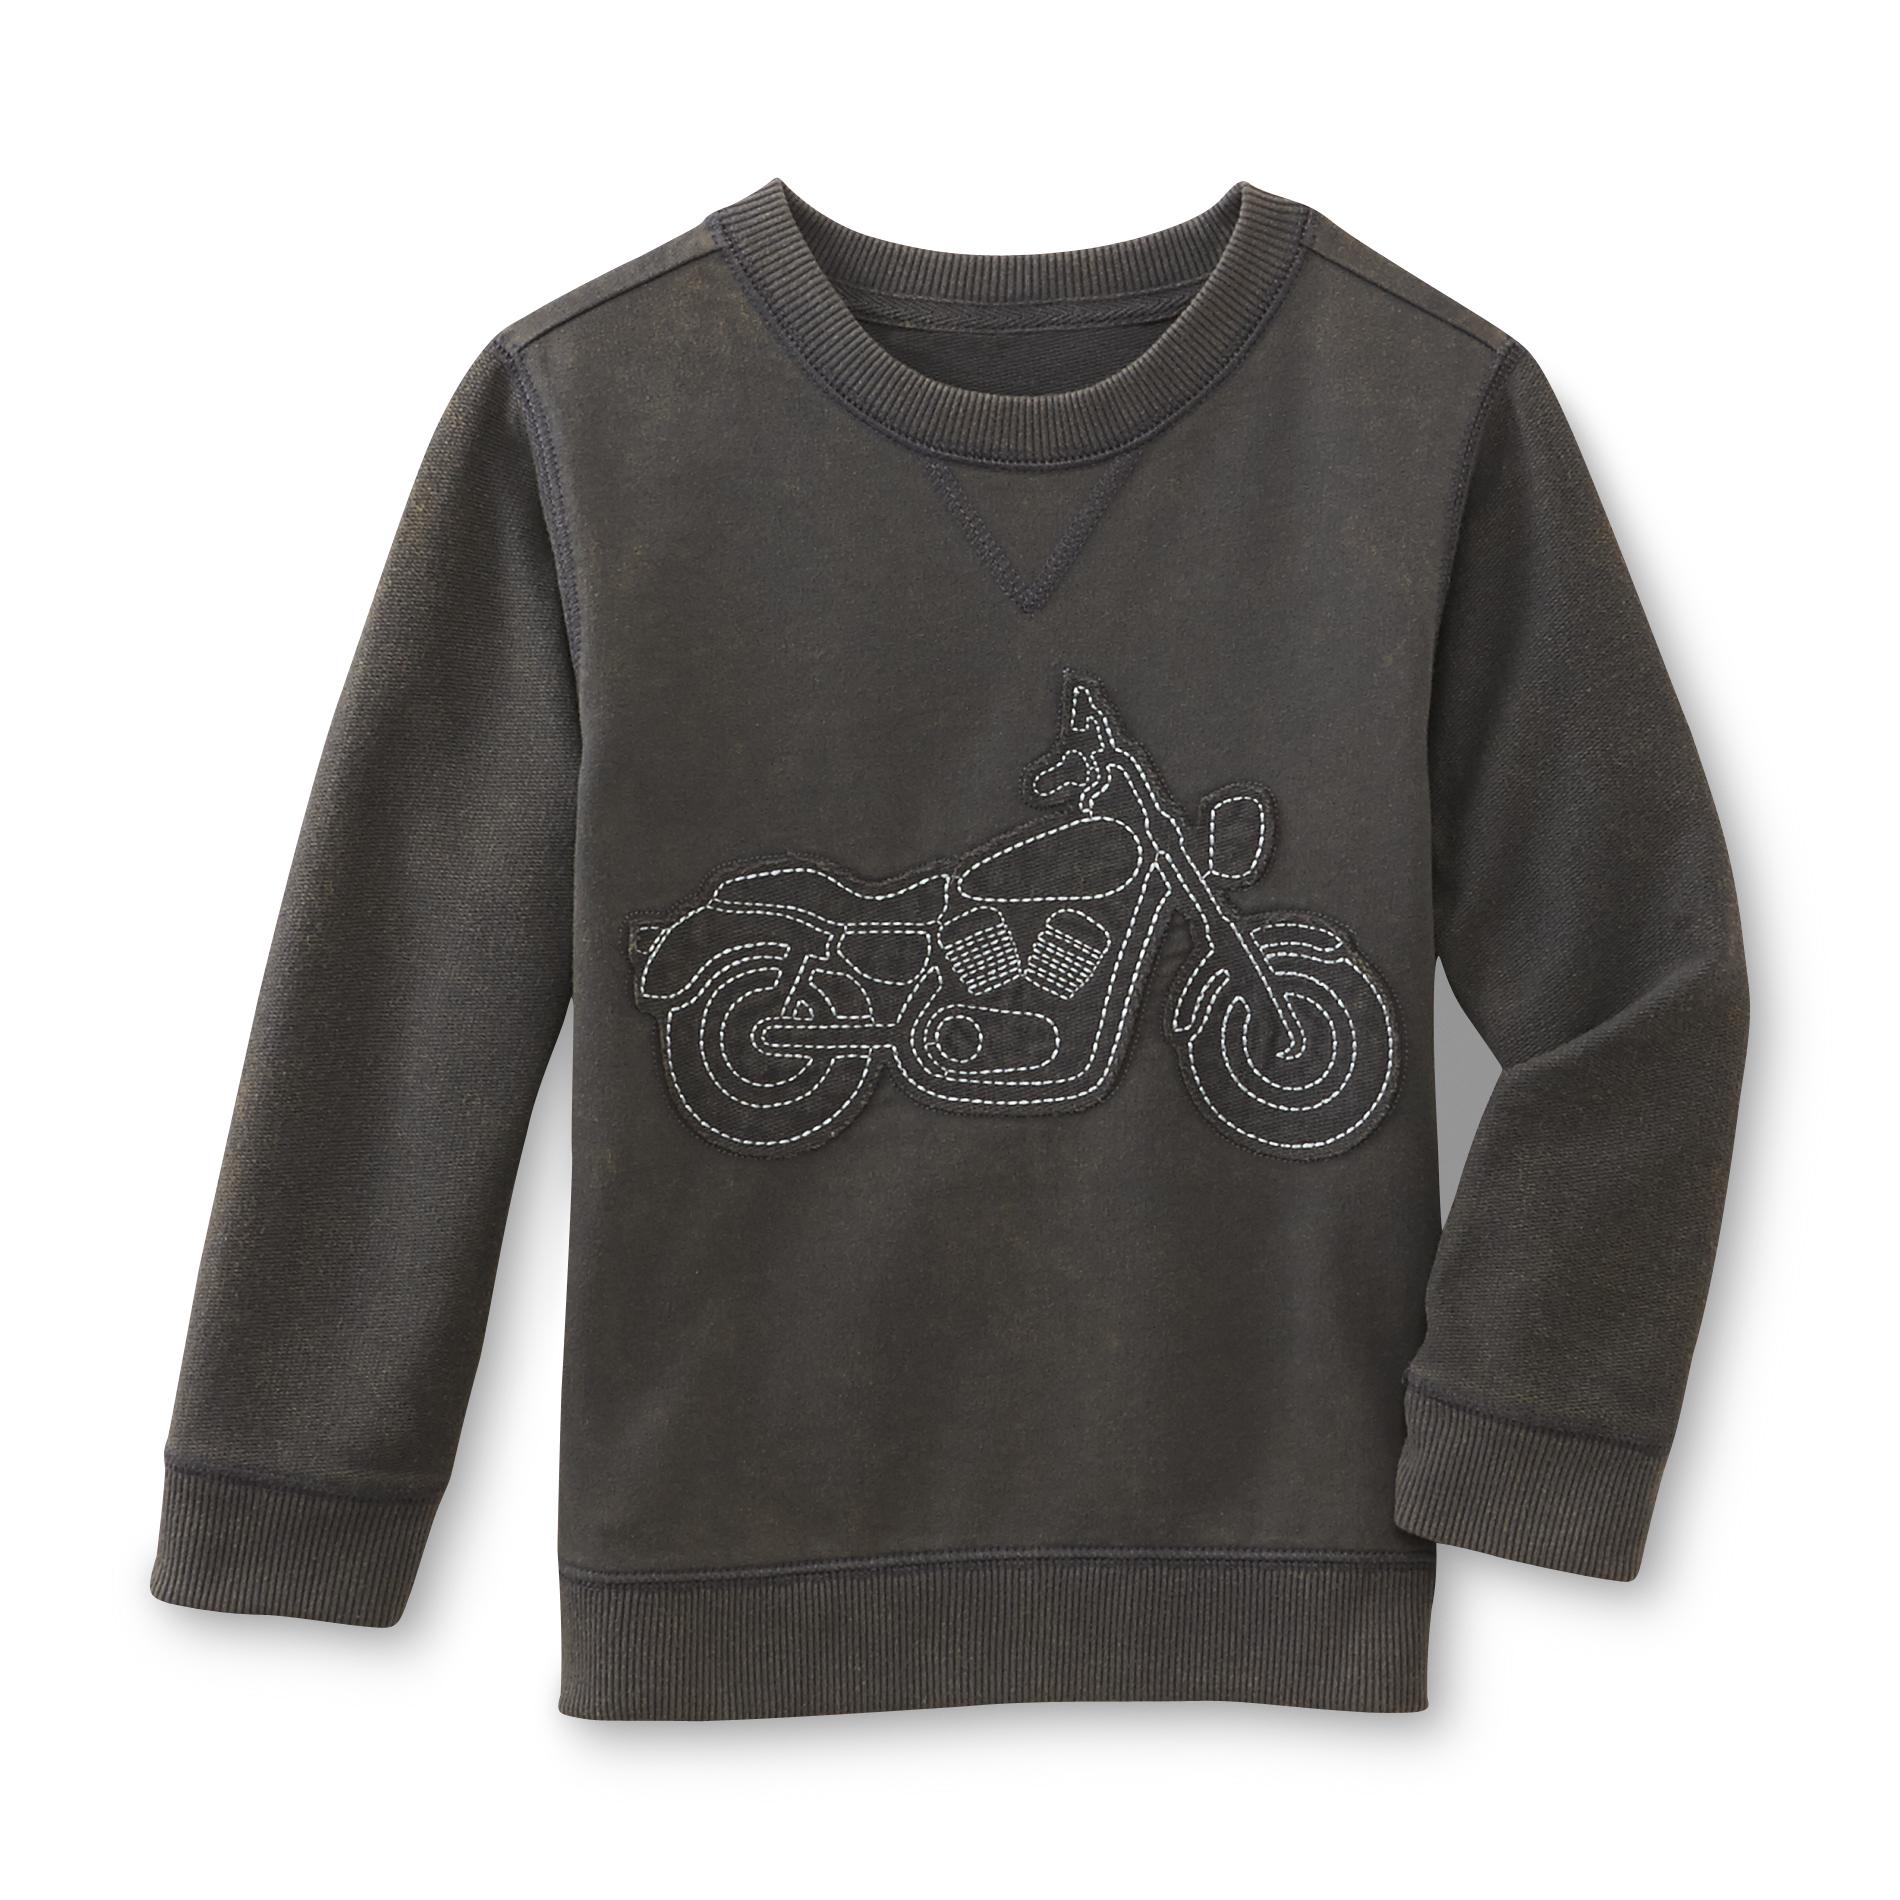 Route 66 Baby Toddler Boy's Sweatshirt - Motorcycle